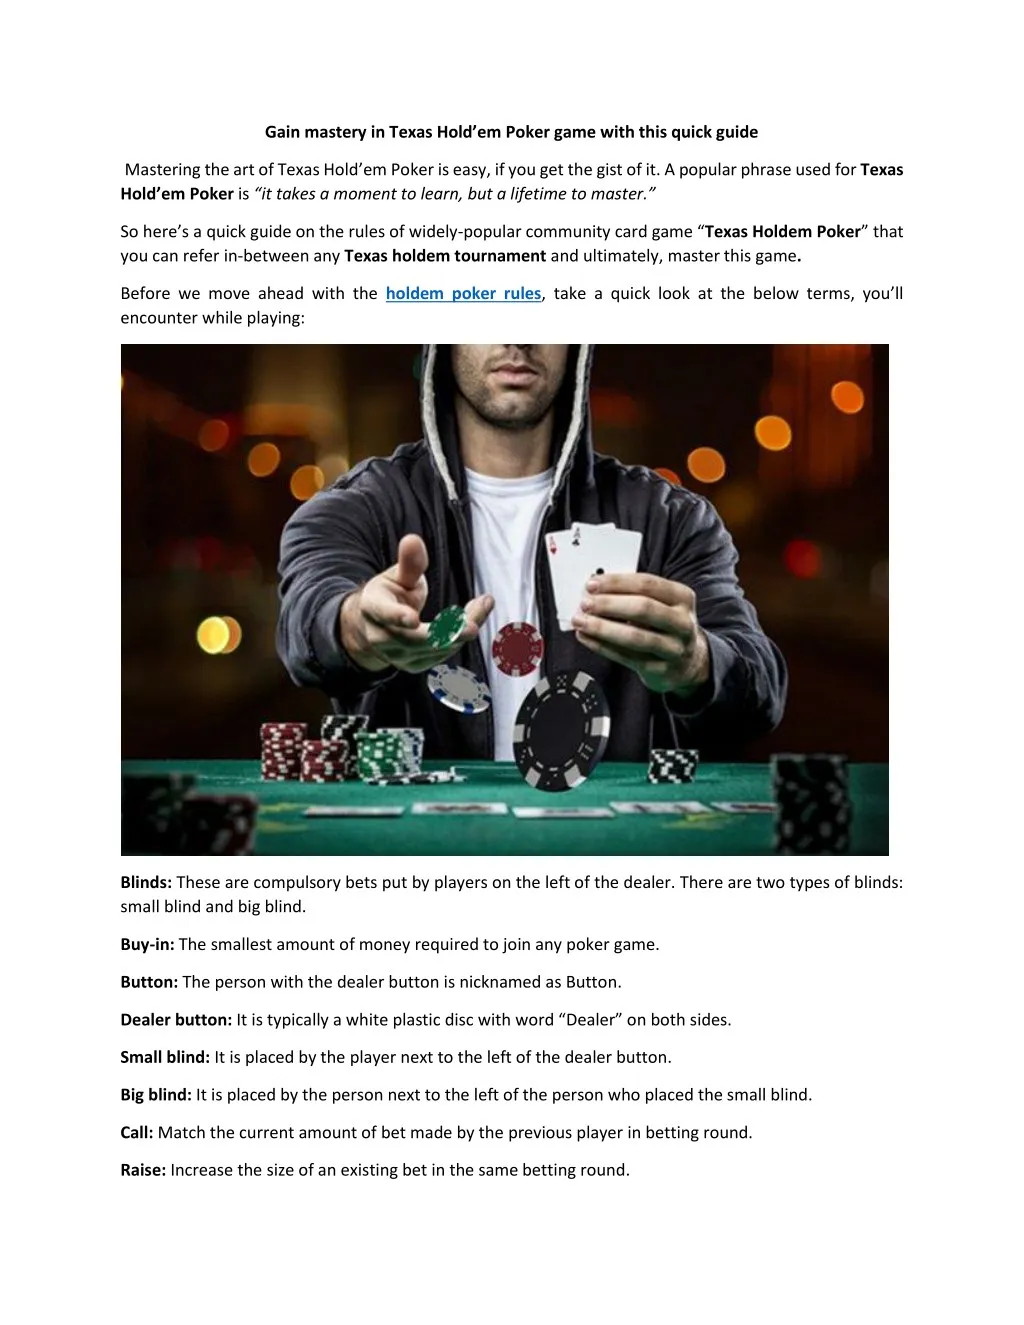 Poker Showdown/Mucking: The Ultimate Guide